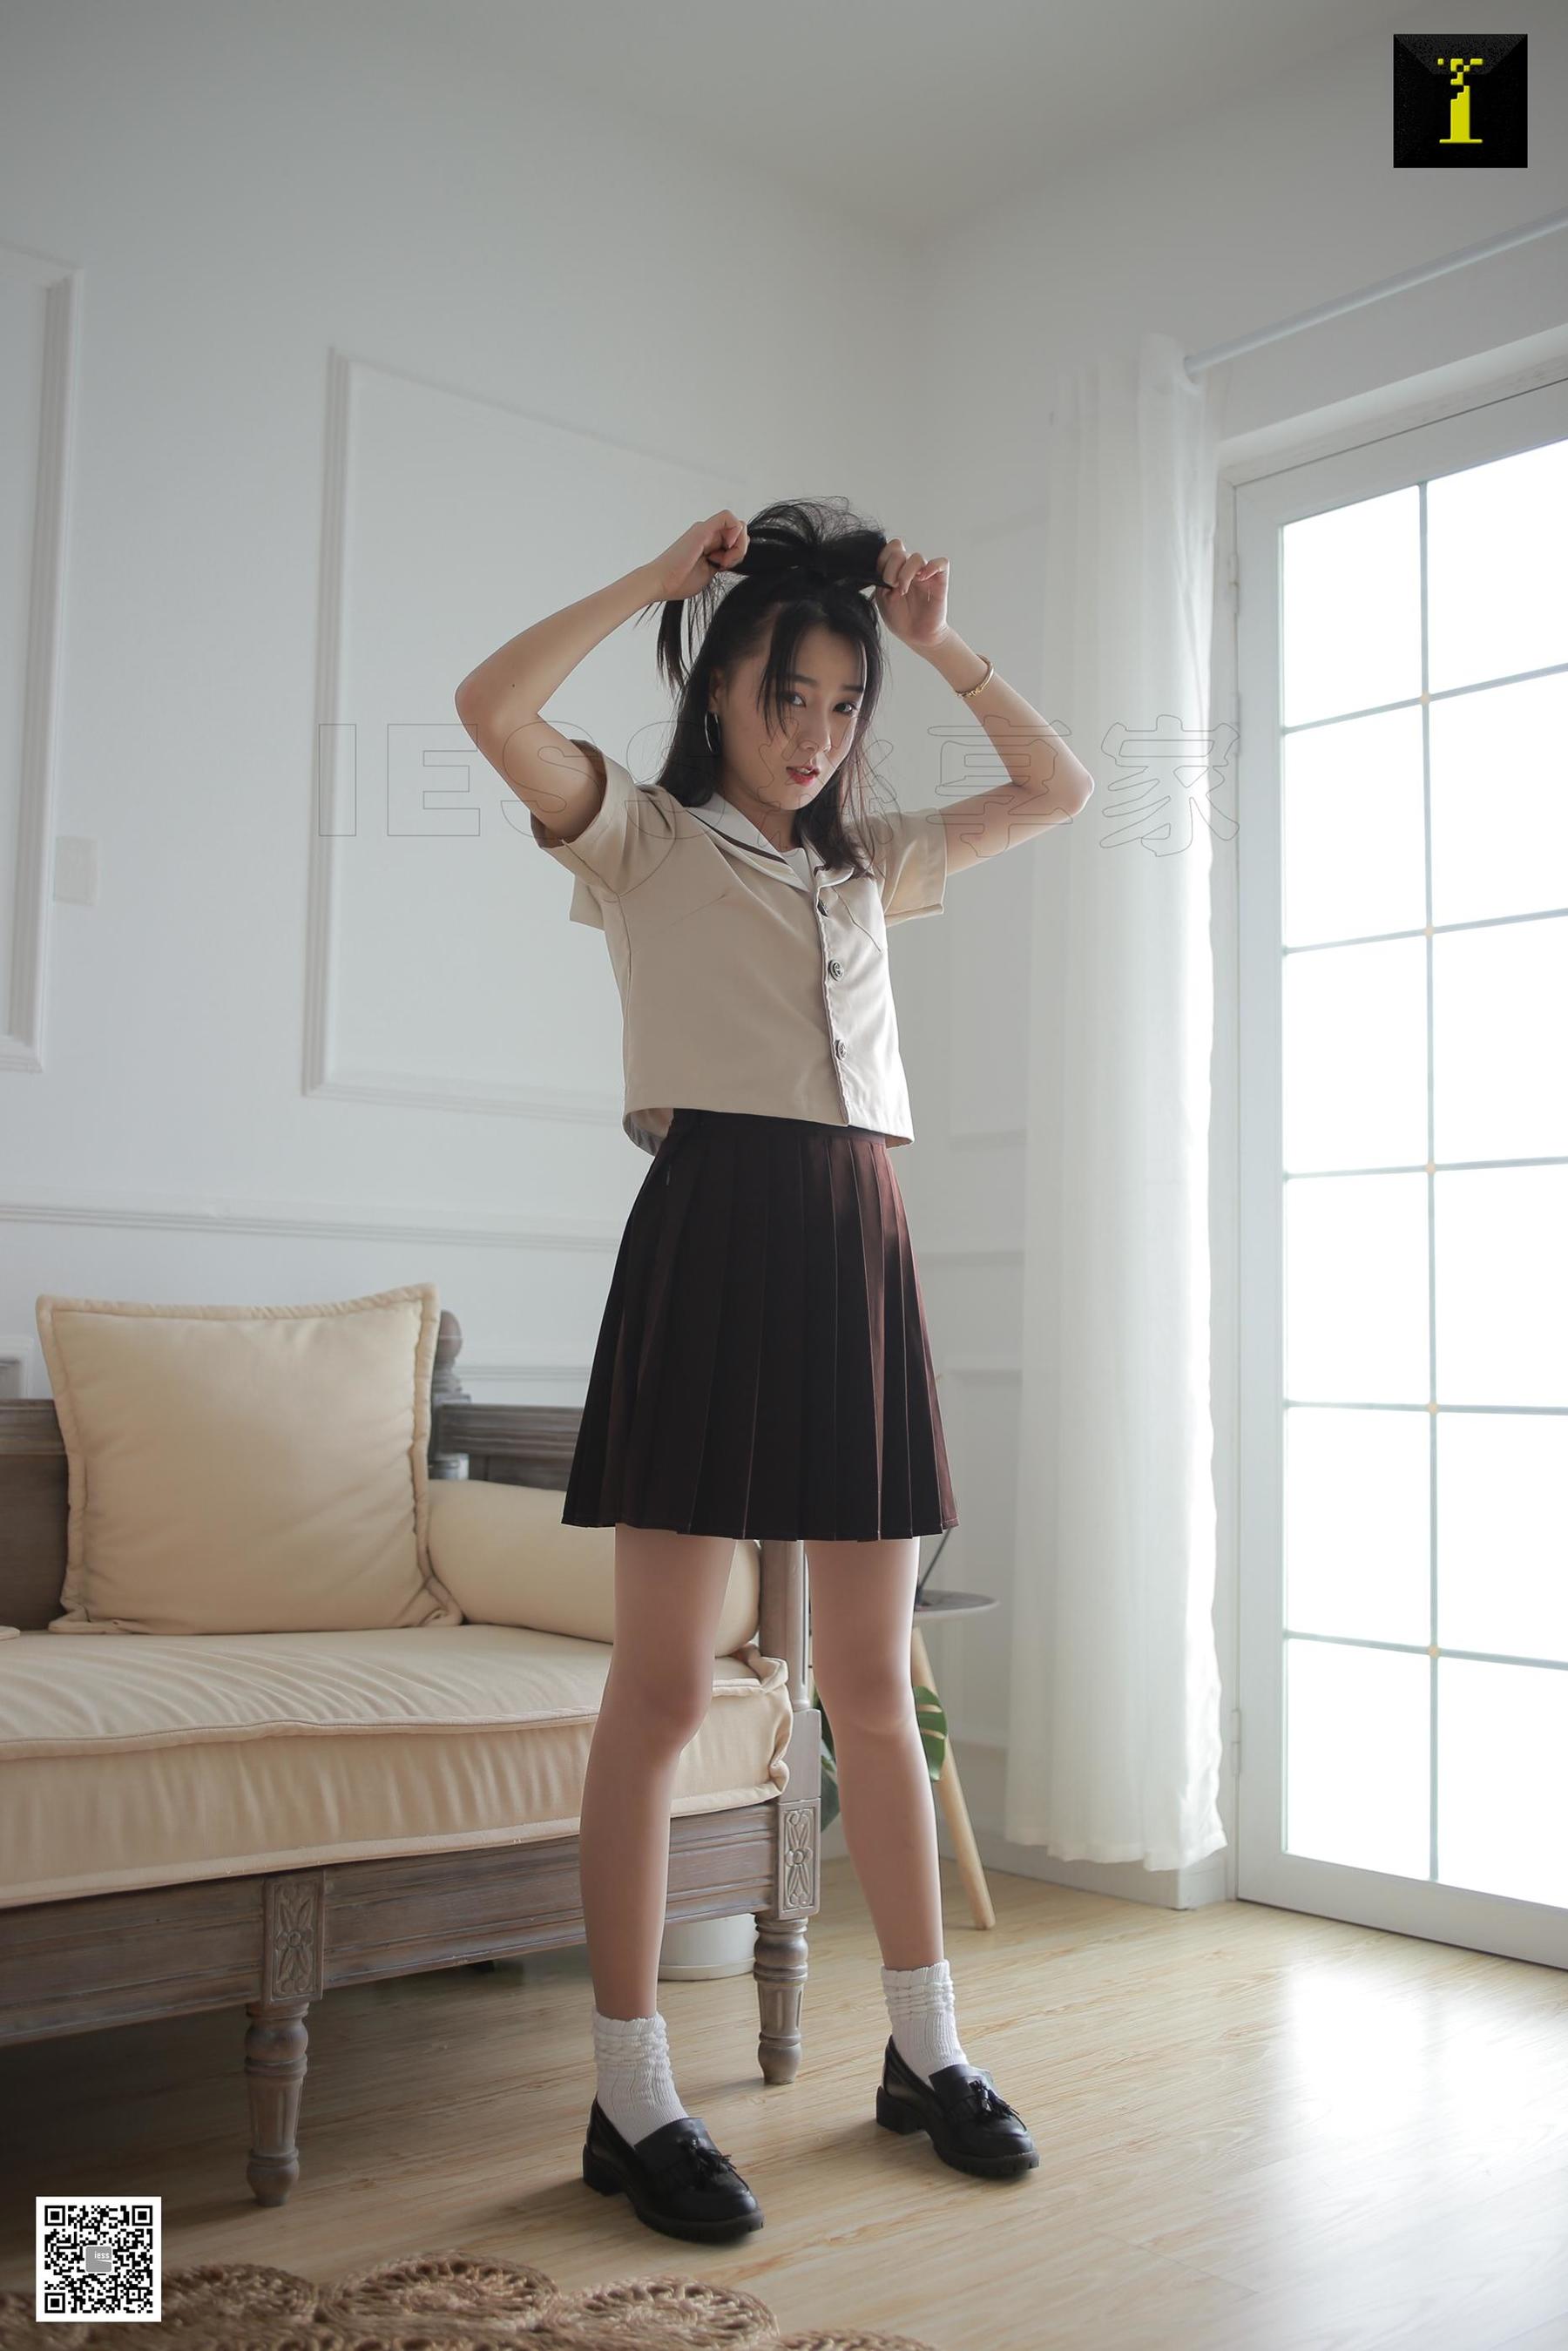 Model small shirt “small shirts to taste JK cotton socks” [IESS inexpensive] beautiful legs foot photo set